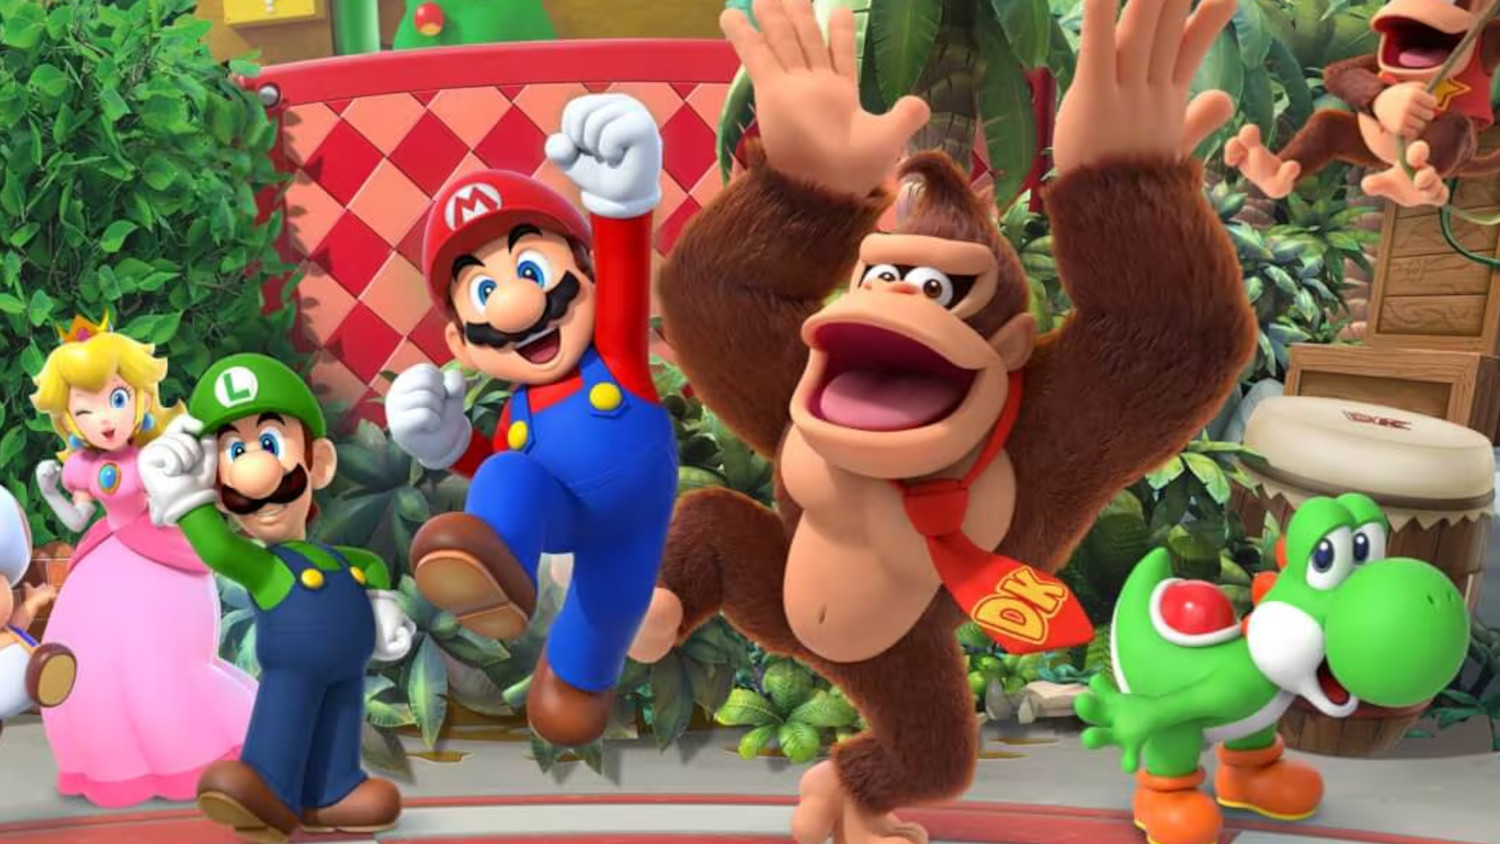 Universal Studios Orlando Reveals Super Nintendo World, Donkey Kong, More